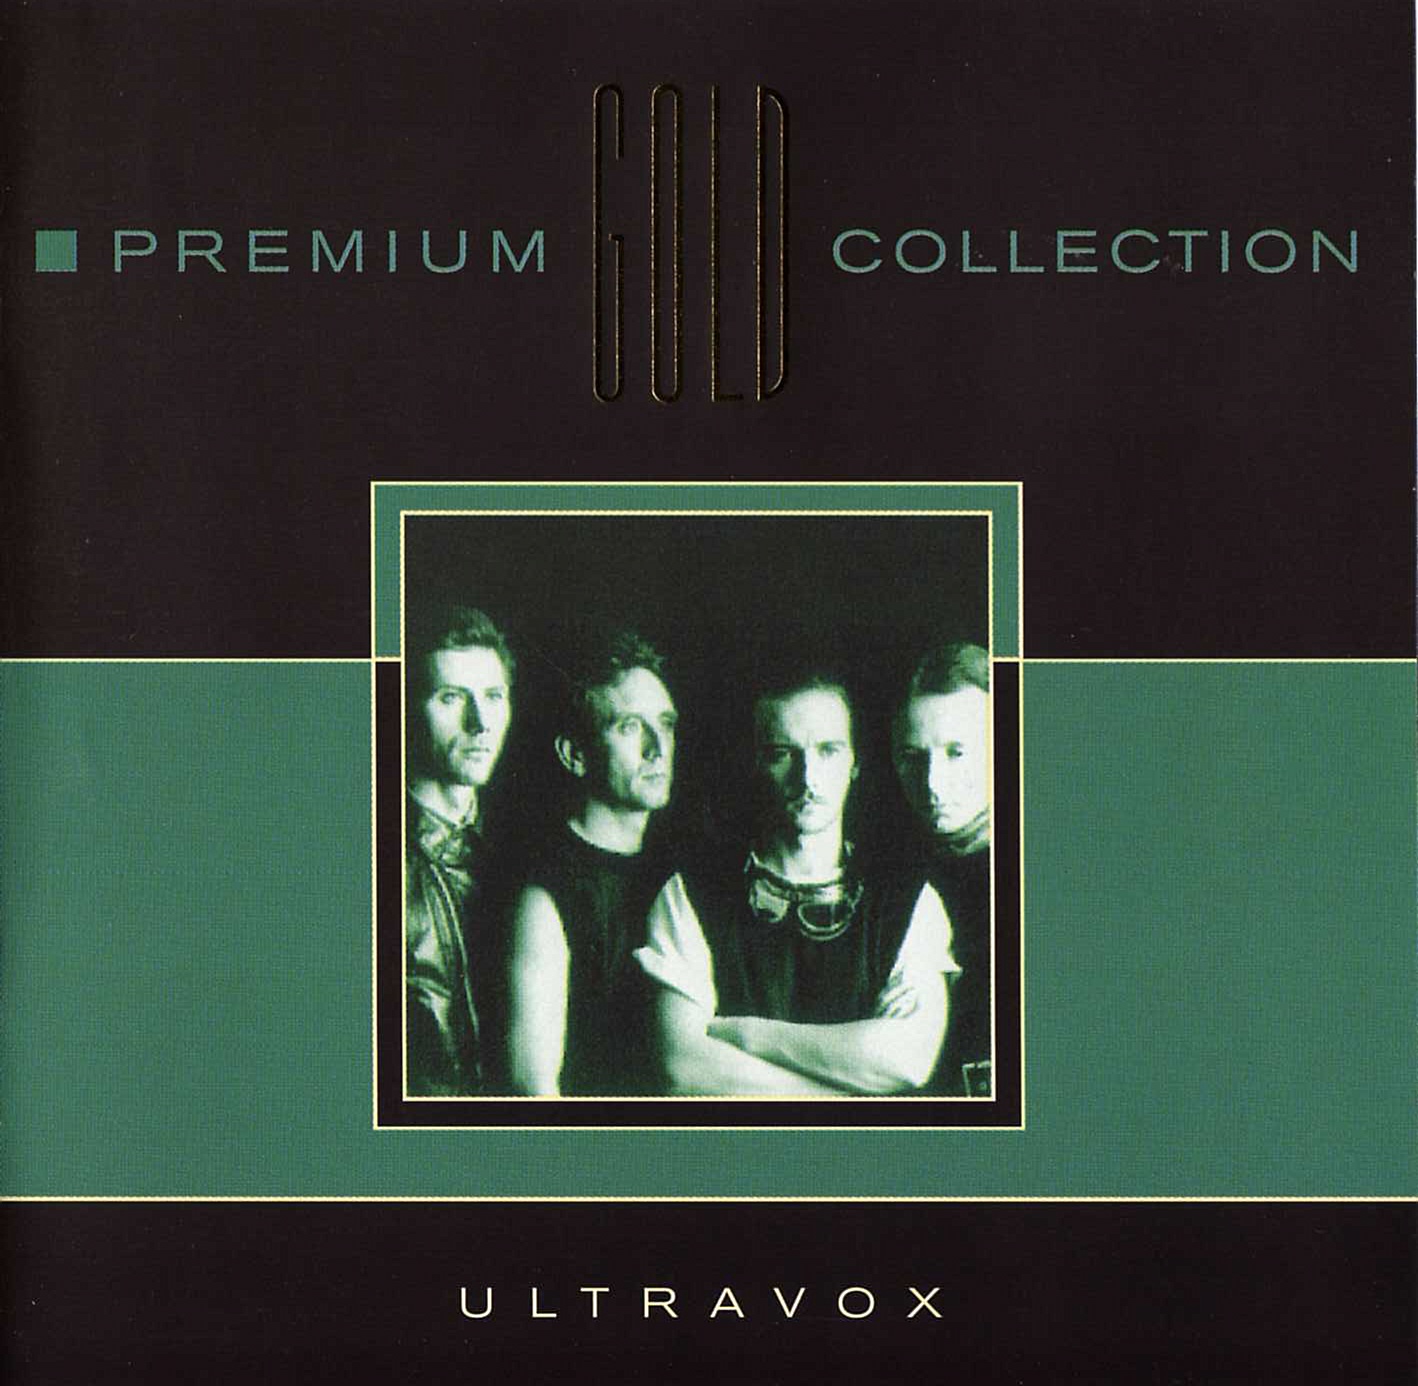 Ultravox-premium gold collection(1996).vol